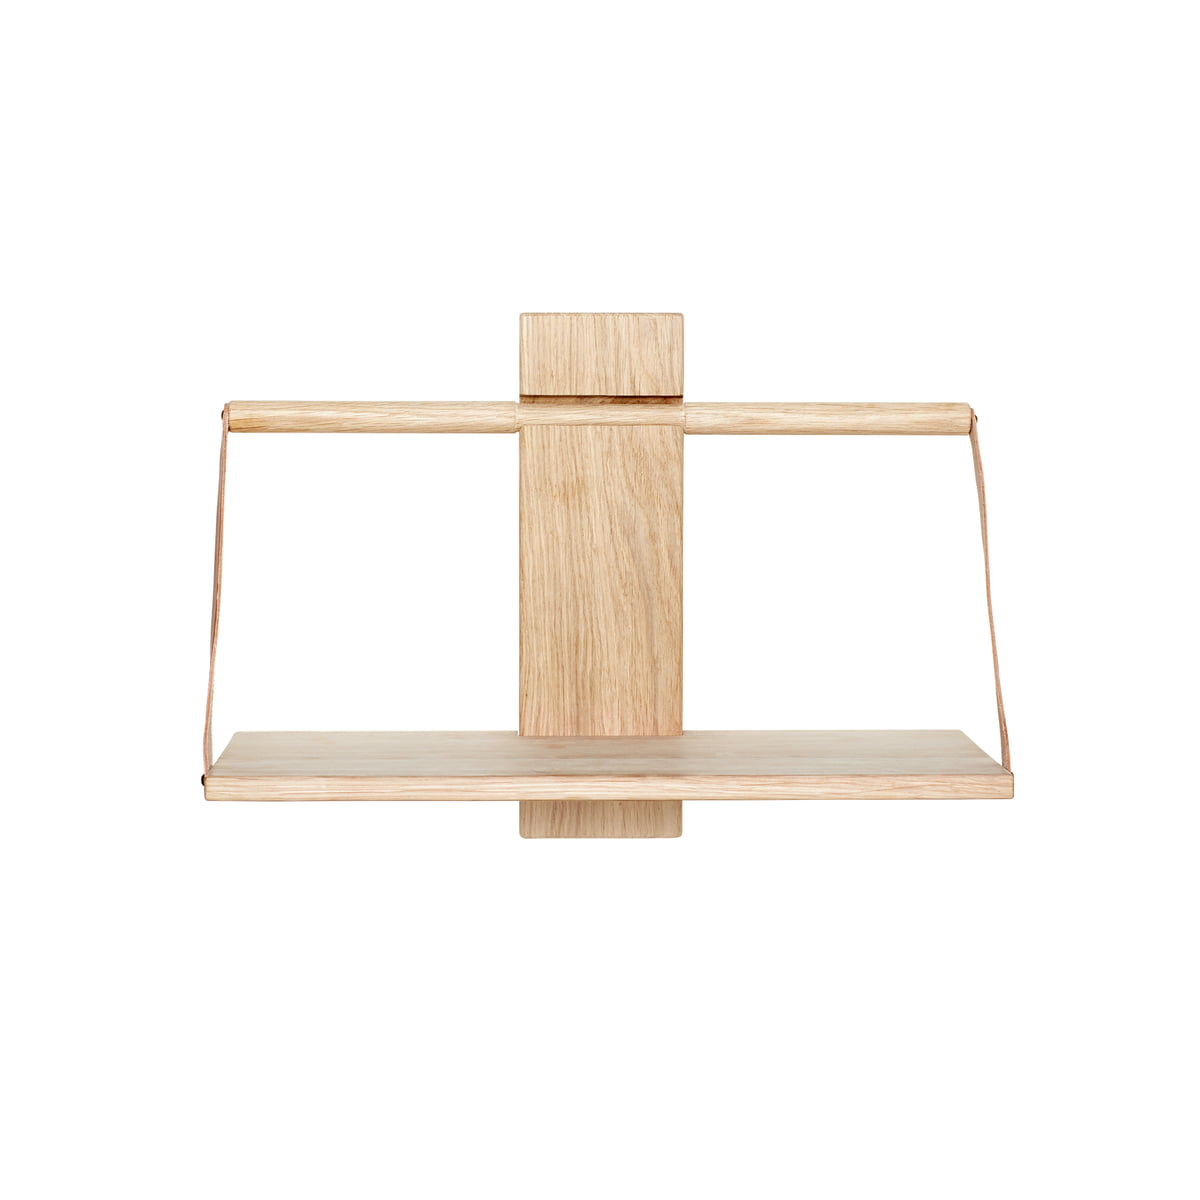 andersen furniture - étagère à suspendre wood wall, 45 x 20 x 32 cm, chêne